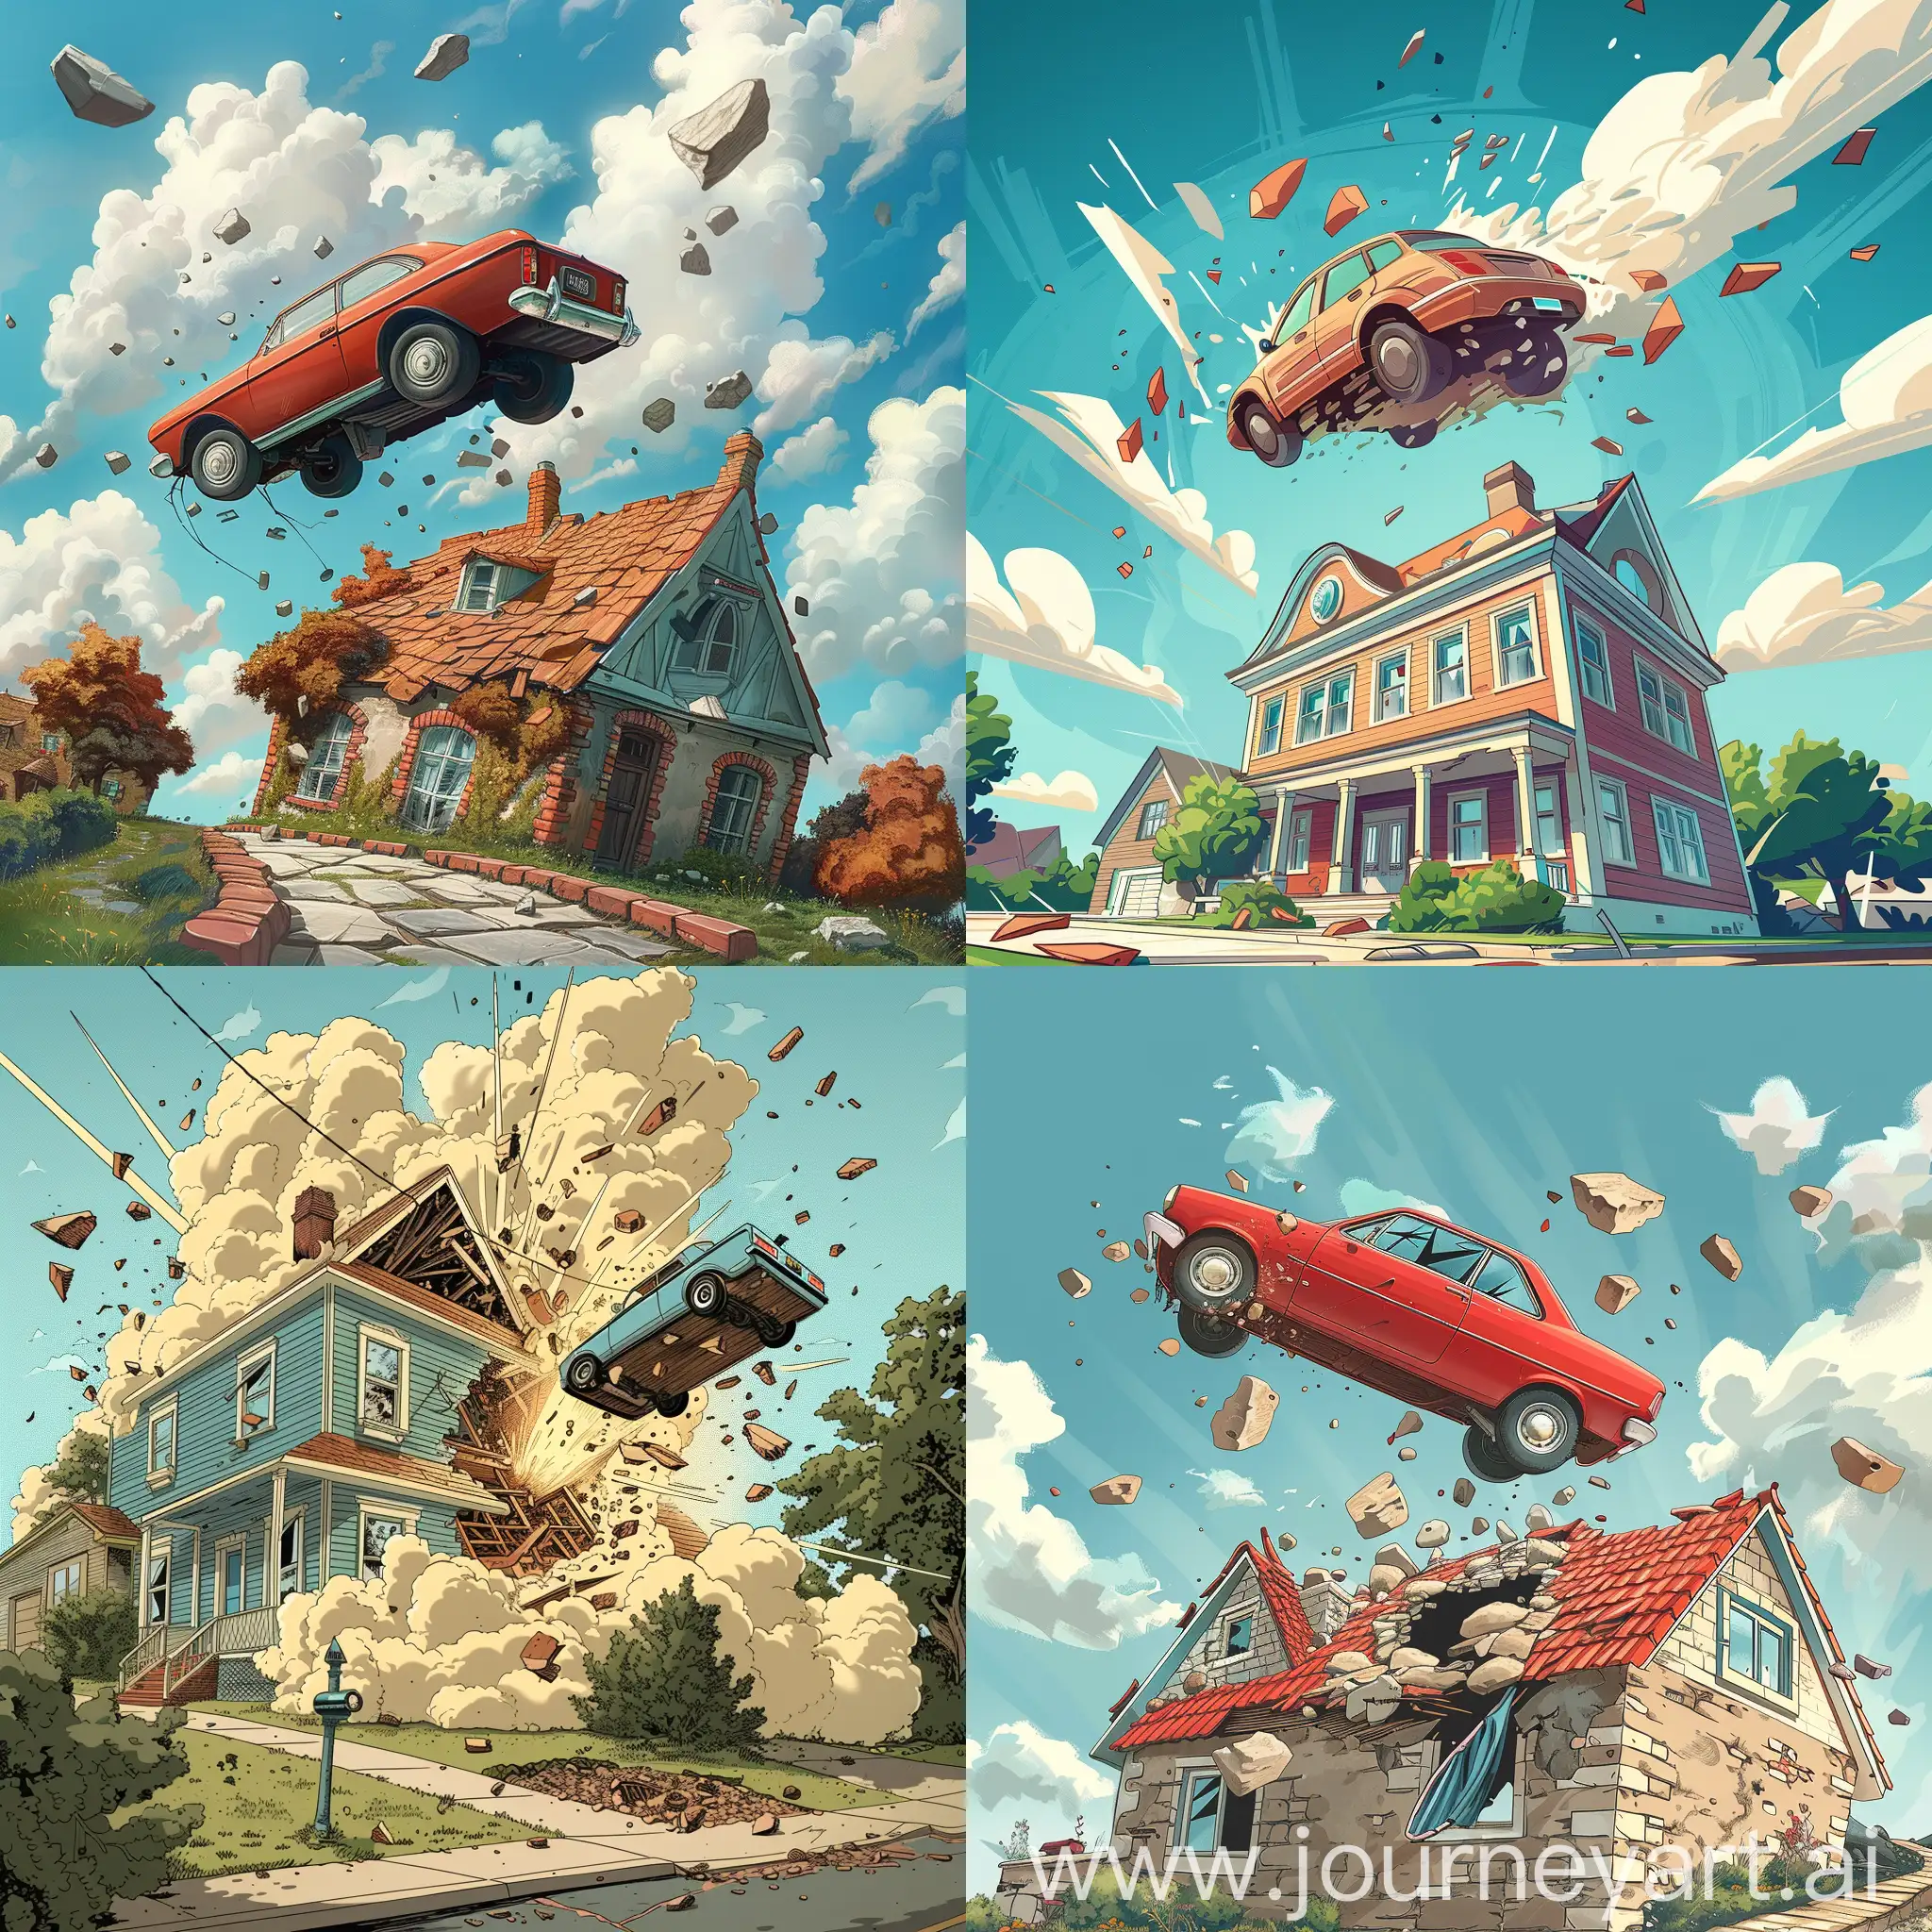 Cartoon-Car-Flying-and-Crashing-into-House